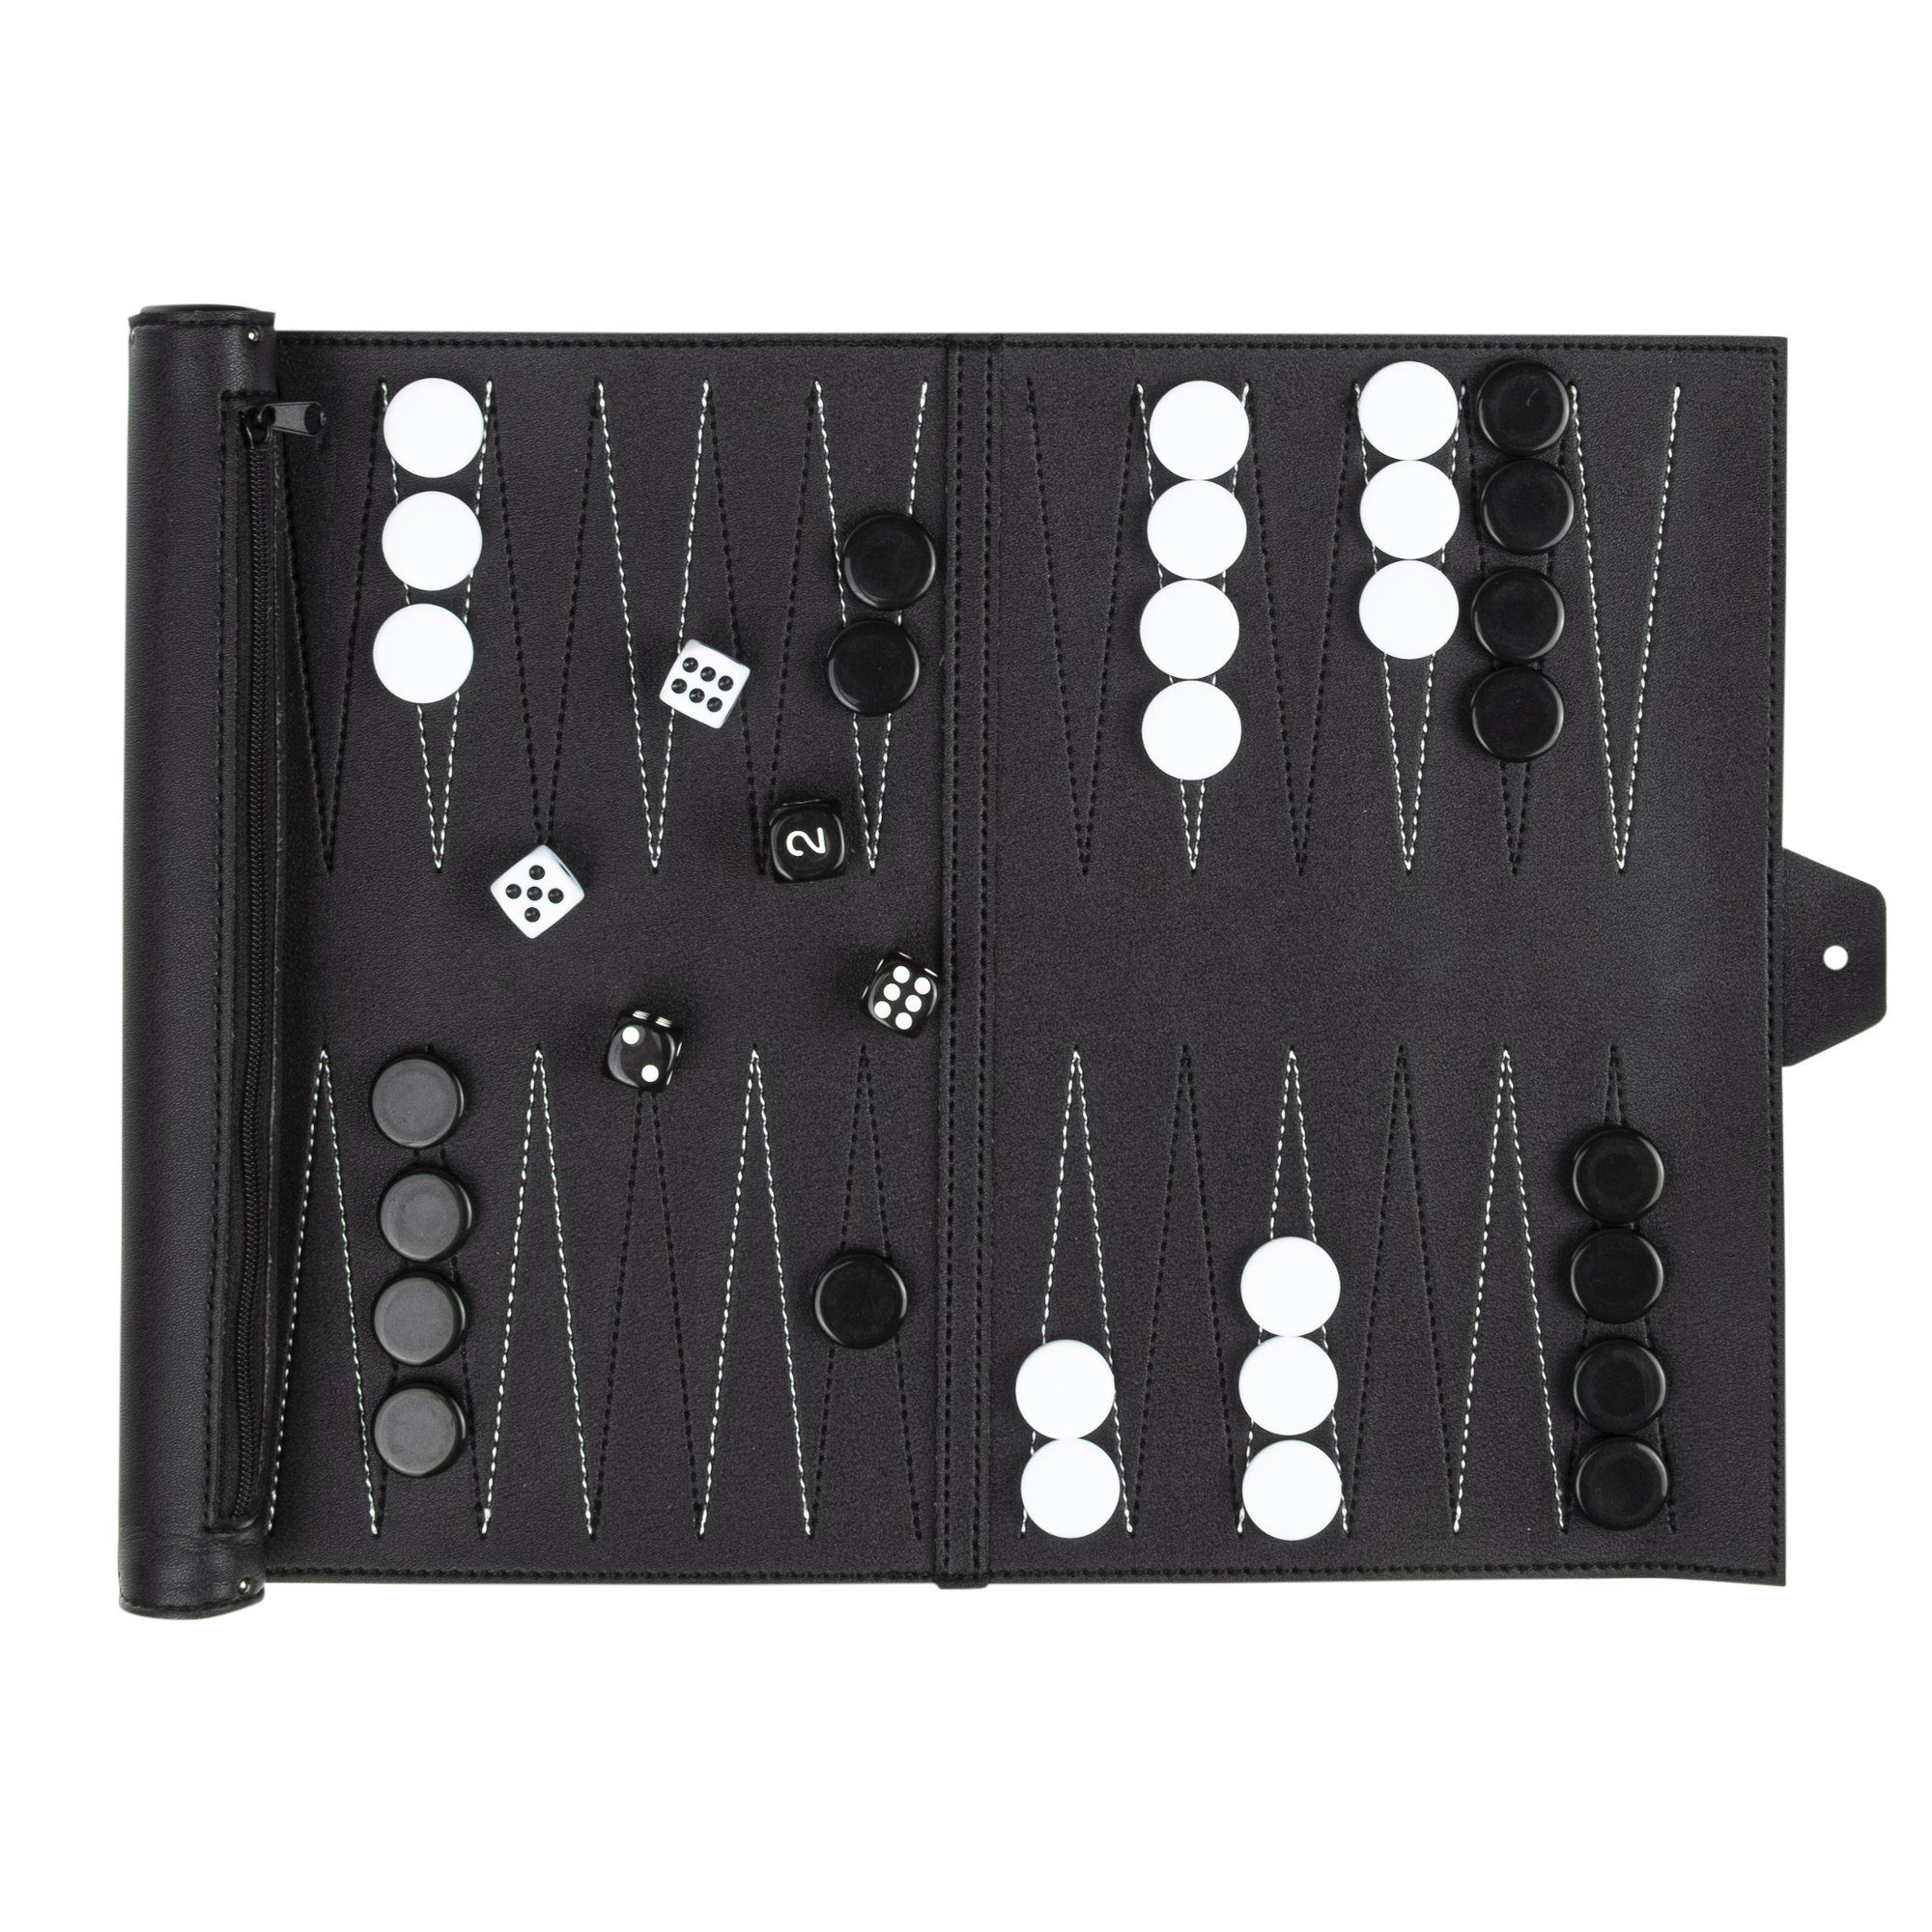 Reise-Backgammon Spiel, Reise Gravidus Brettspiel Backgammon Kompakt Reisespiel